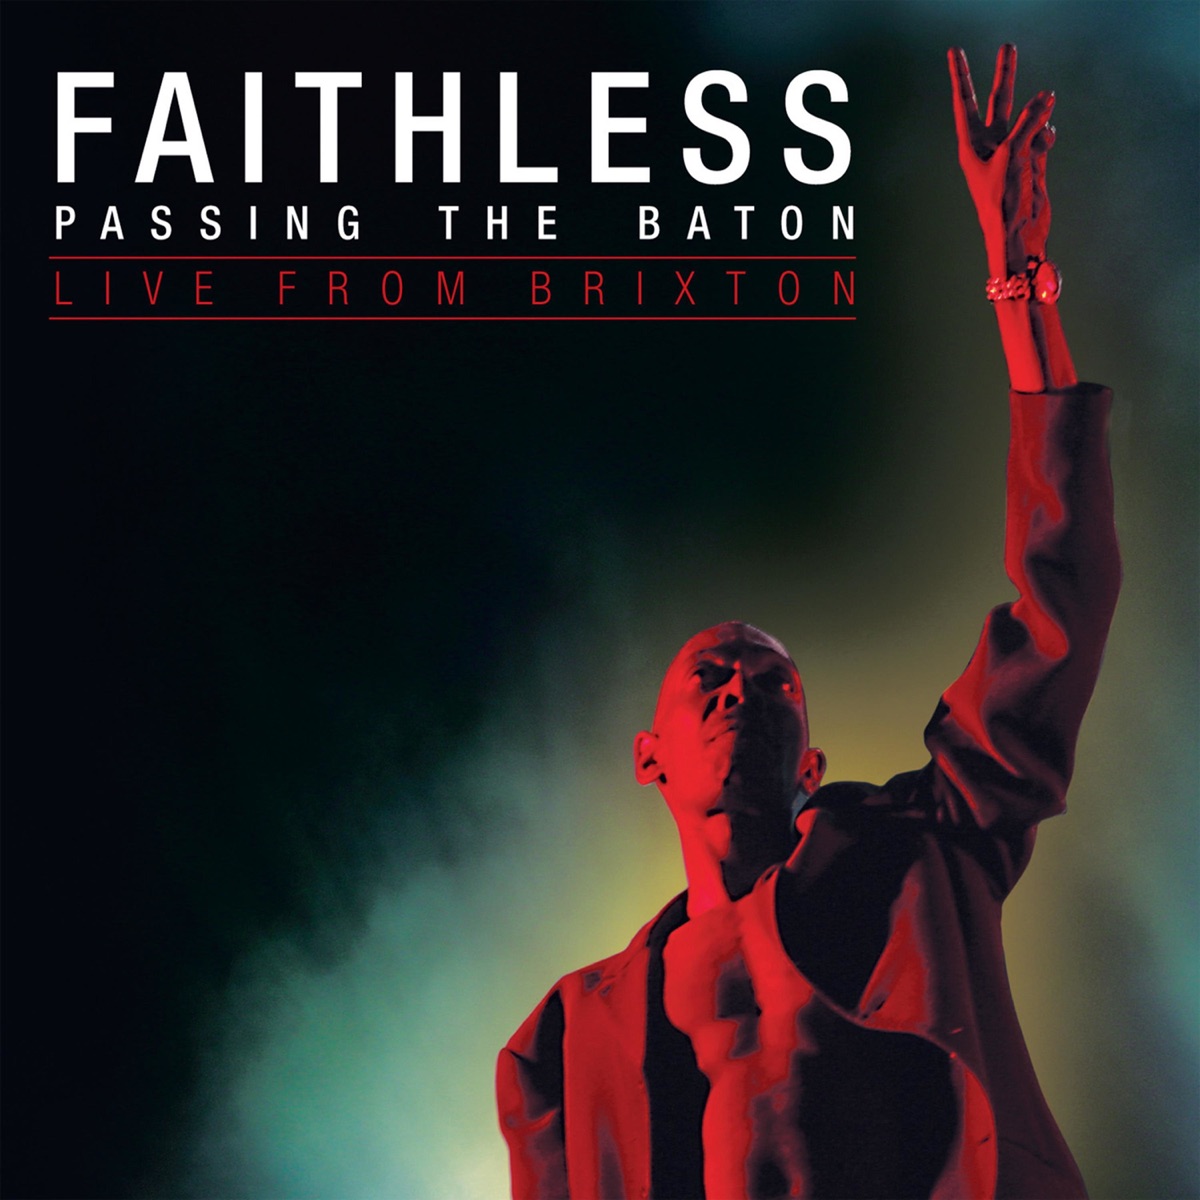 Forever Faithless - The Greatest Hits by Faithless on Apple Music